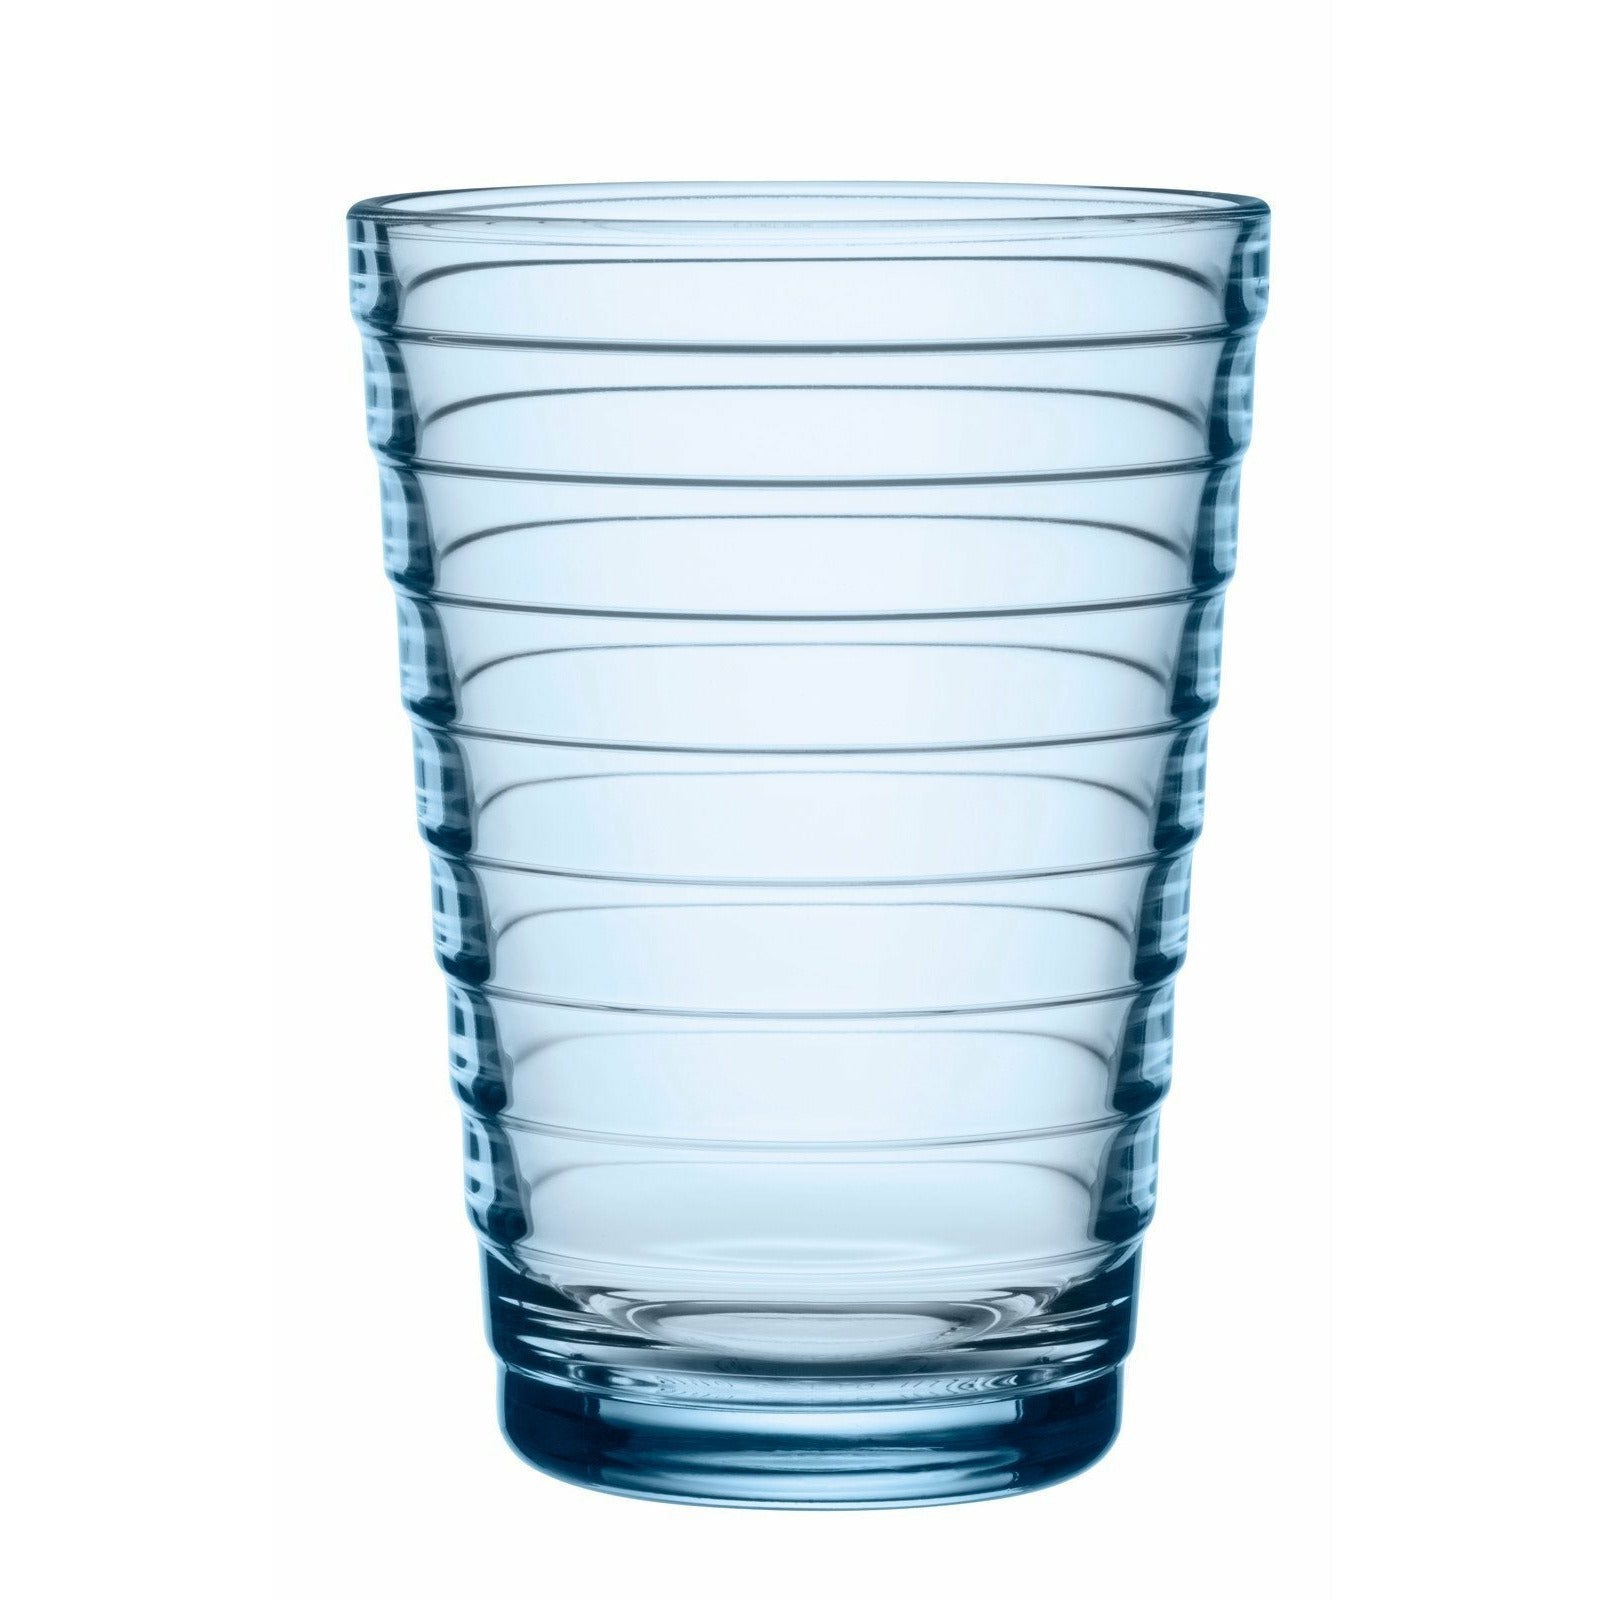 Iittala Aino Aalto Drinkglas Aqua 33Cl, 2pcs.